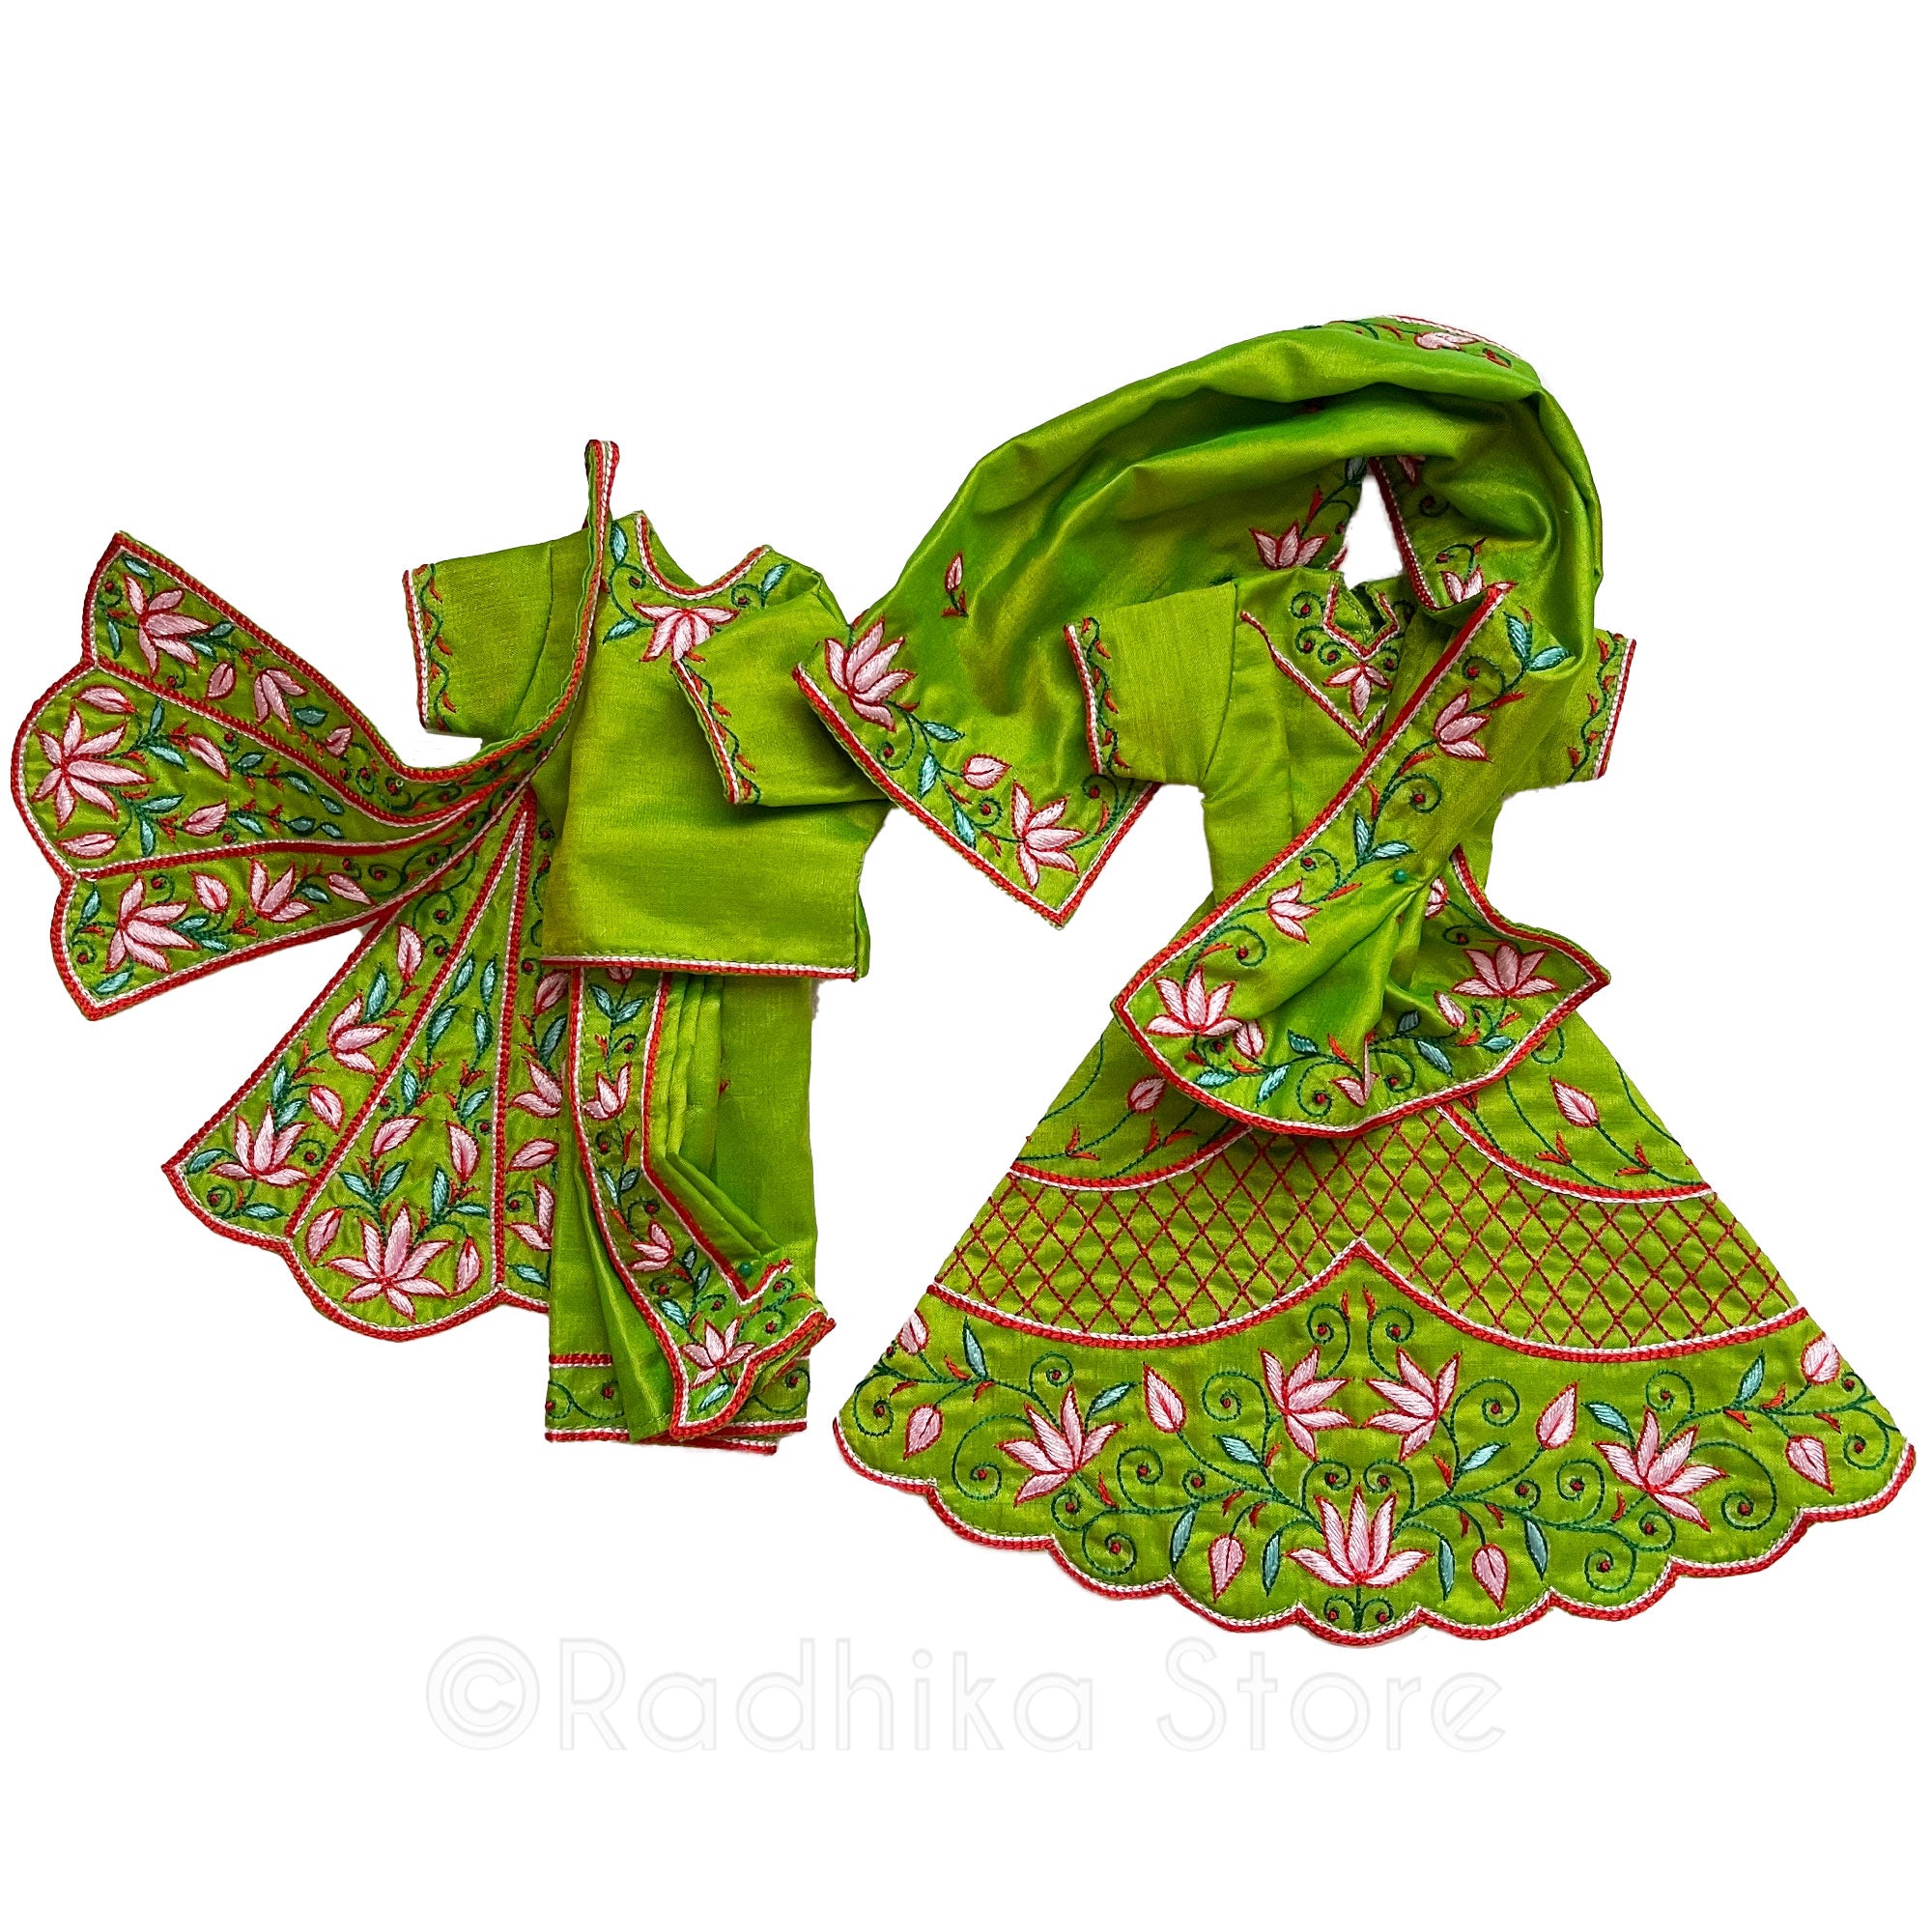 Prem Sarovara Lotus- All Silk - Pond Green - Radha Krishna Deity Outfit